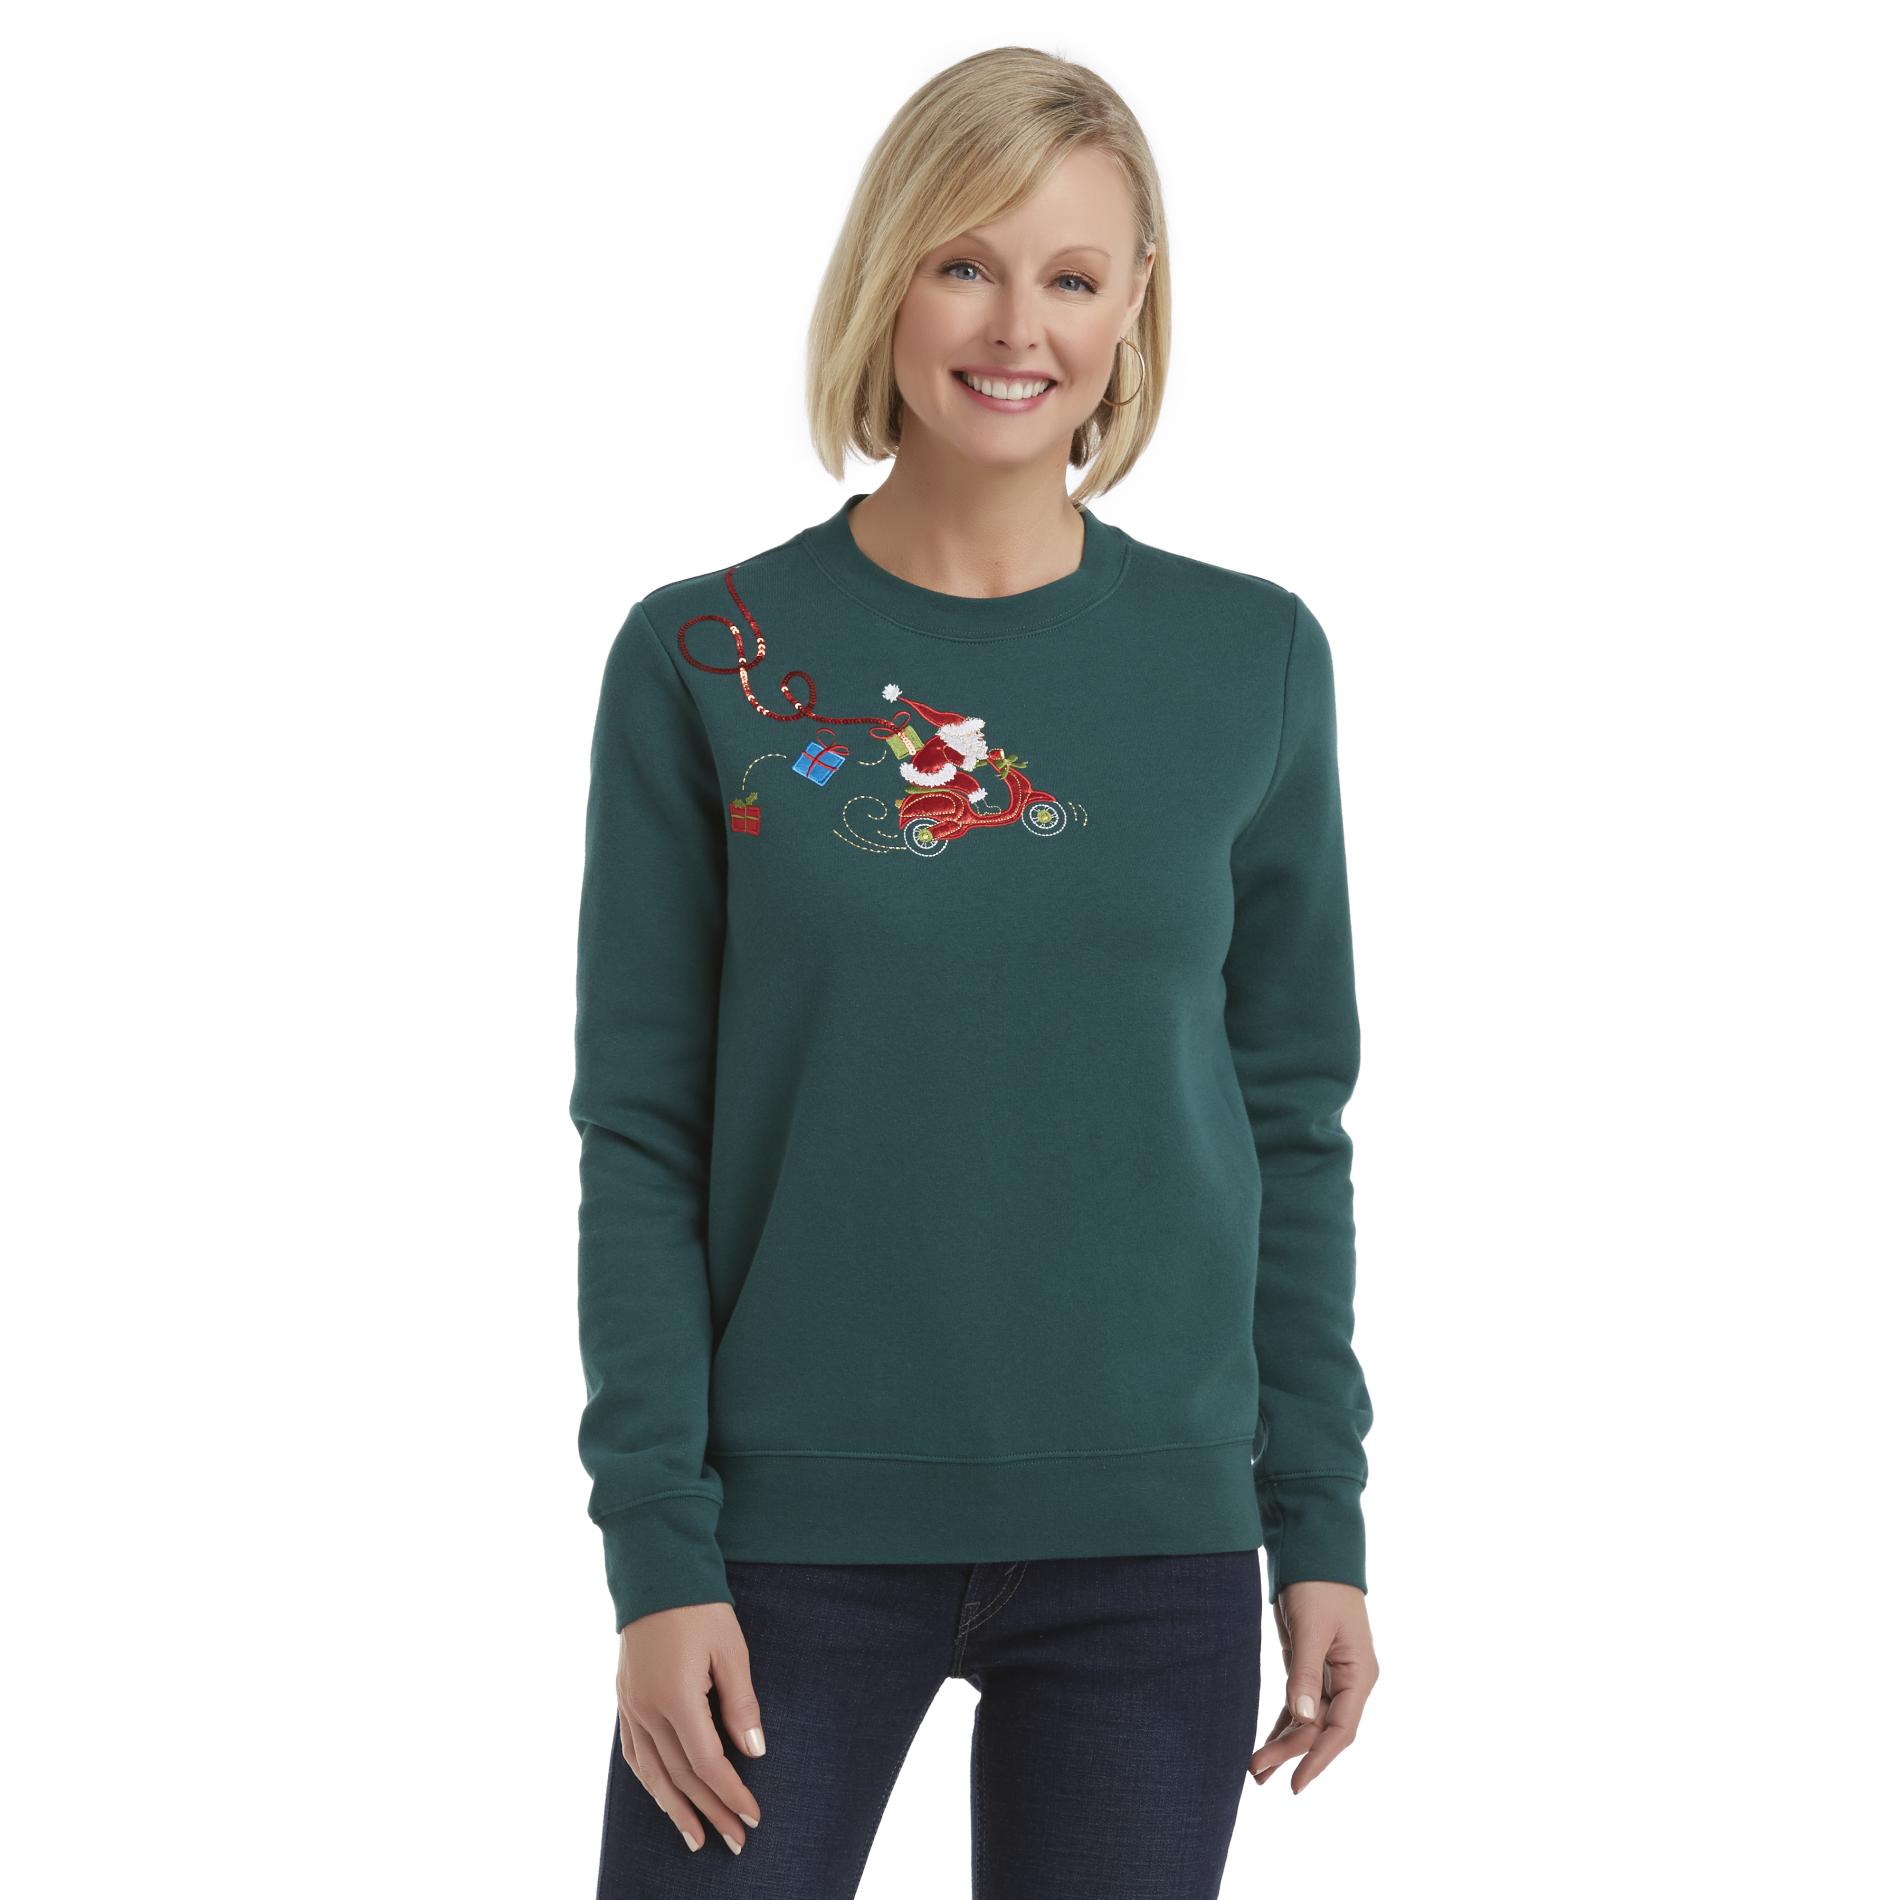 Holiday Editions Women's Christmas Fleece Sweatshirt - Santa